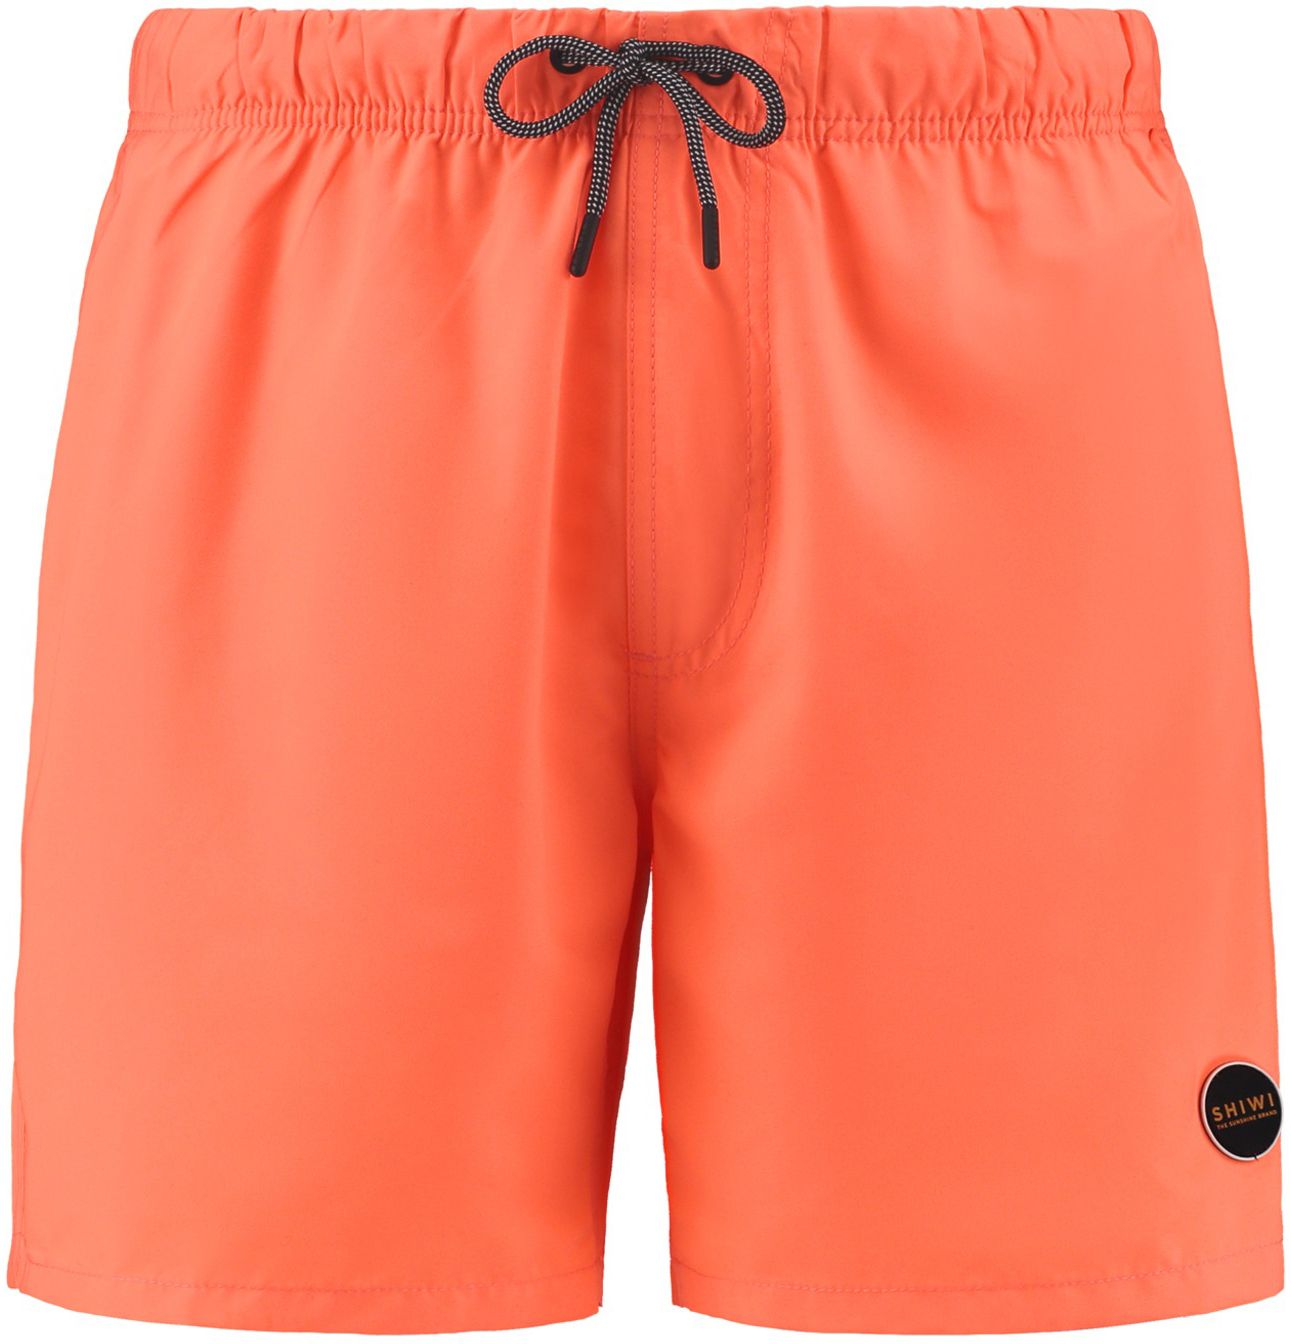 Shiwi Swimshorts Neon Orange size XXL